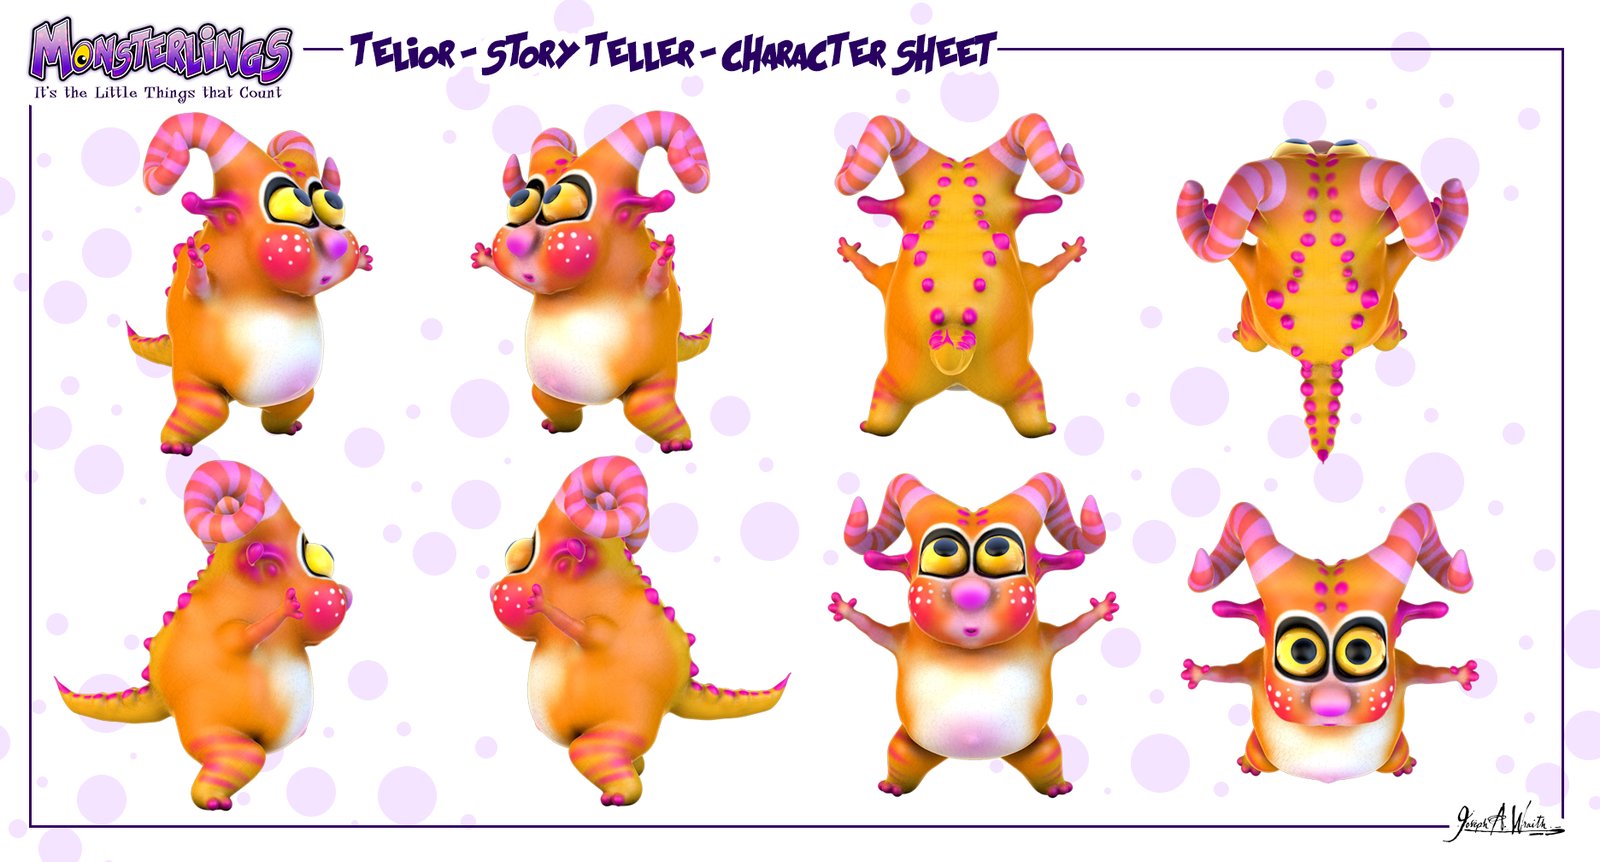 Monsterlings - Telior Physical Character Sheet